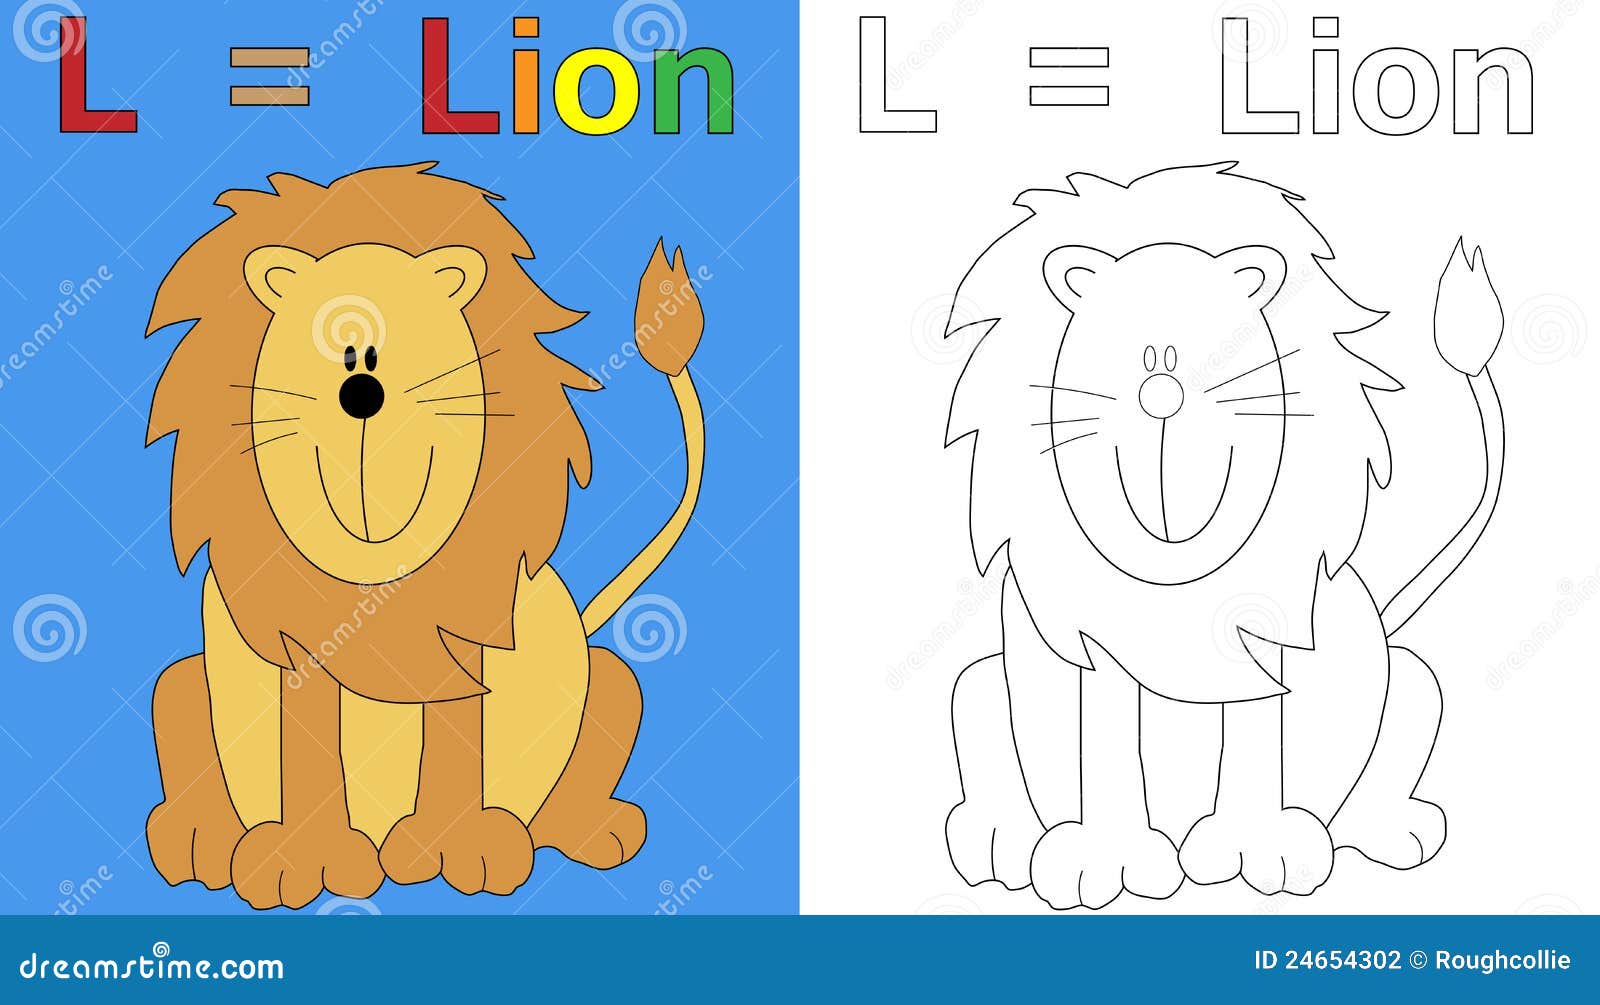 lion coloring book page stock illustration illustration of design 24654302